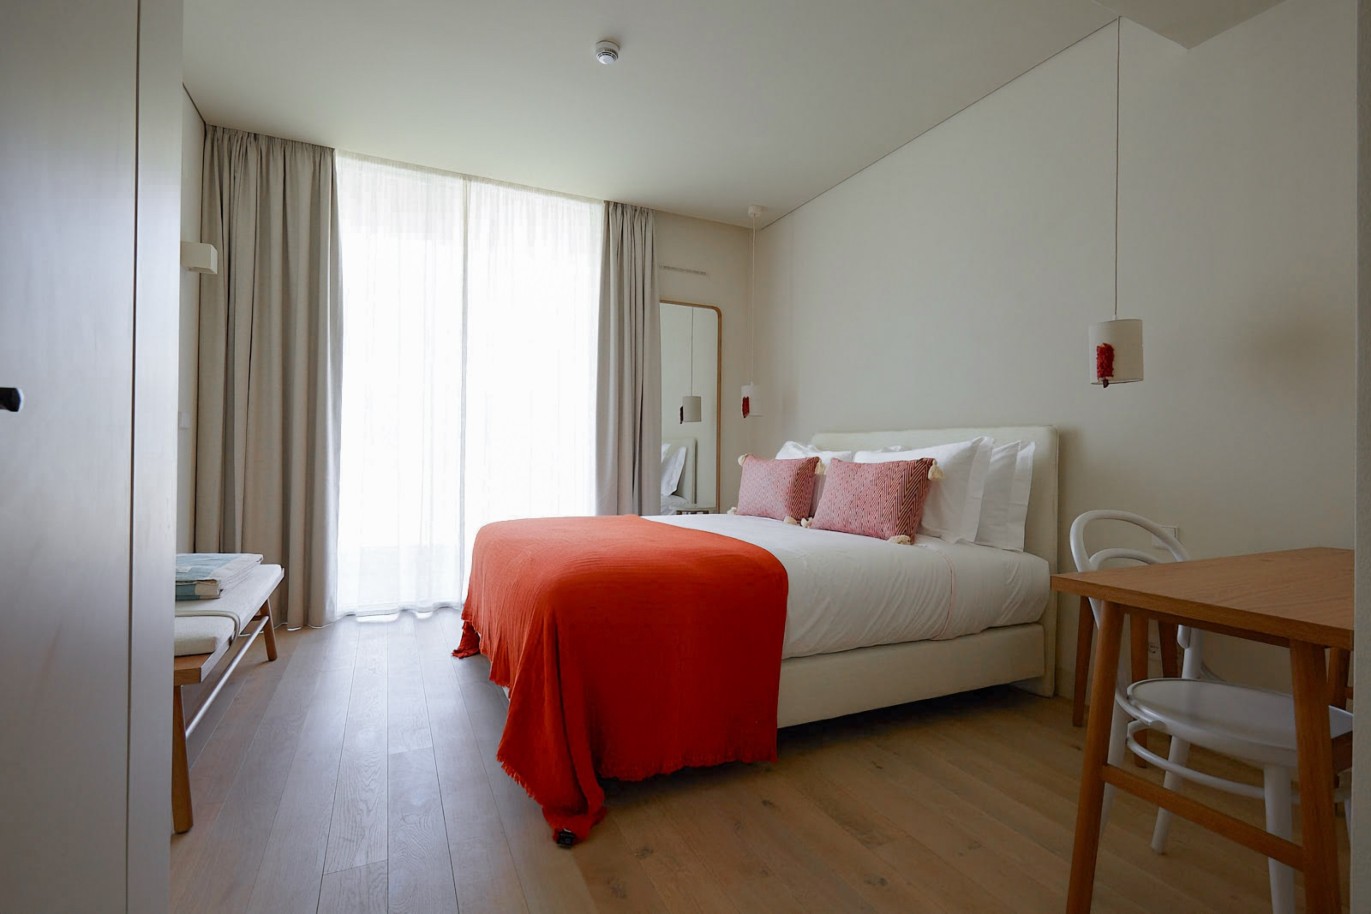 2 bedroom apartment in resort, for sale in Porches, Algarve_228941